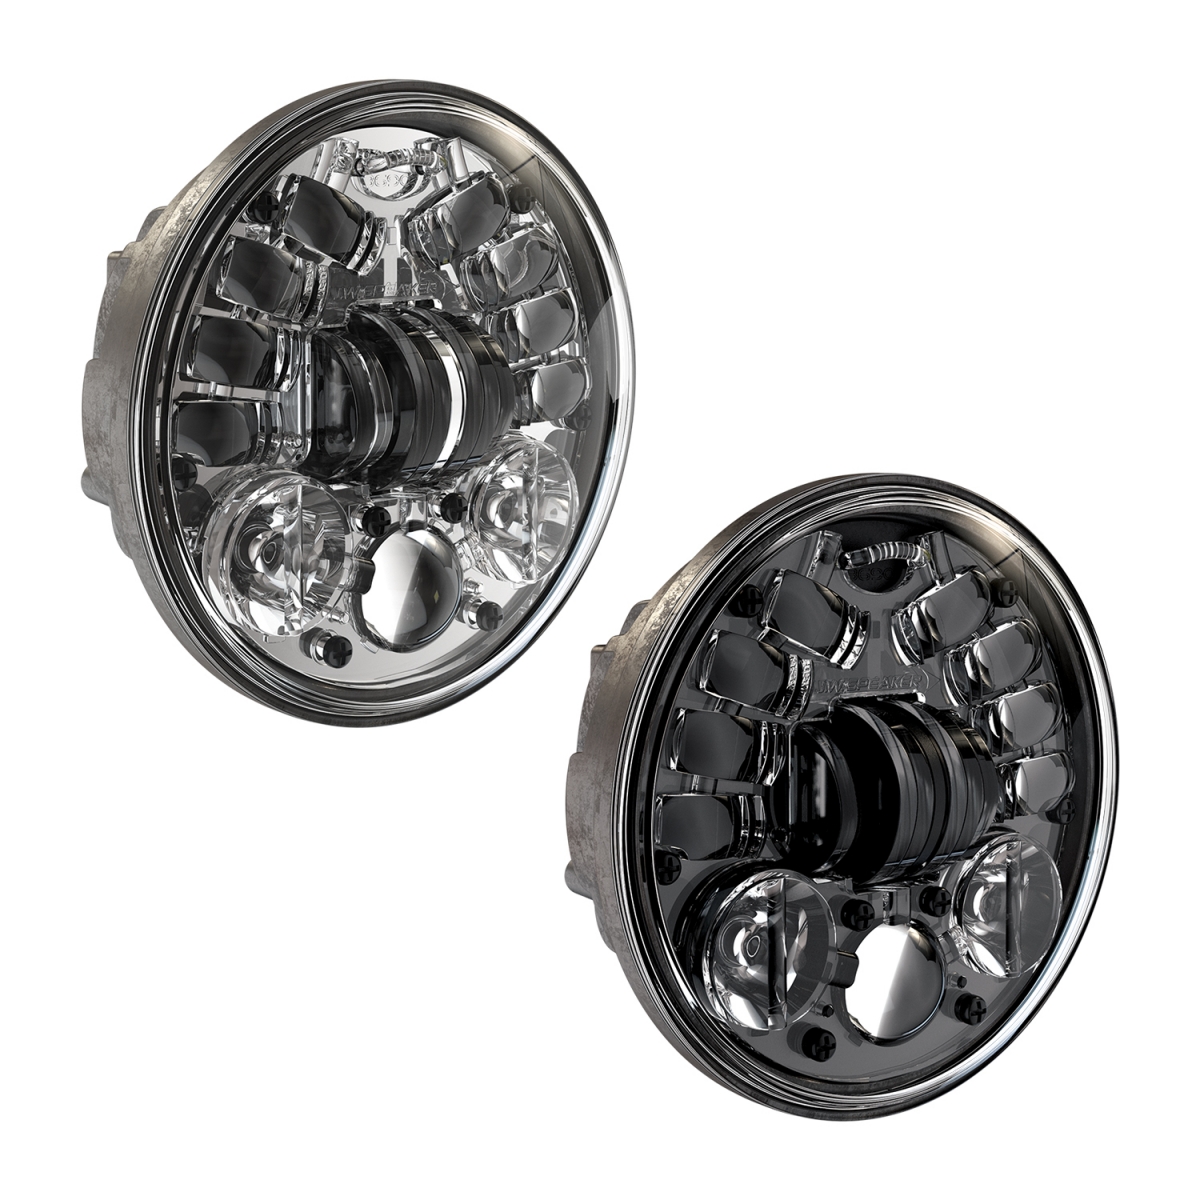 LED Motorcycle Headlight Model 8690 M Series